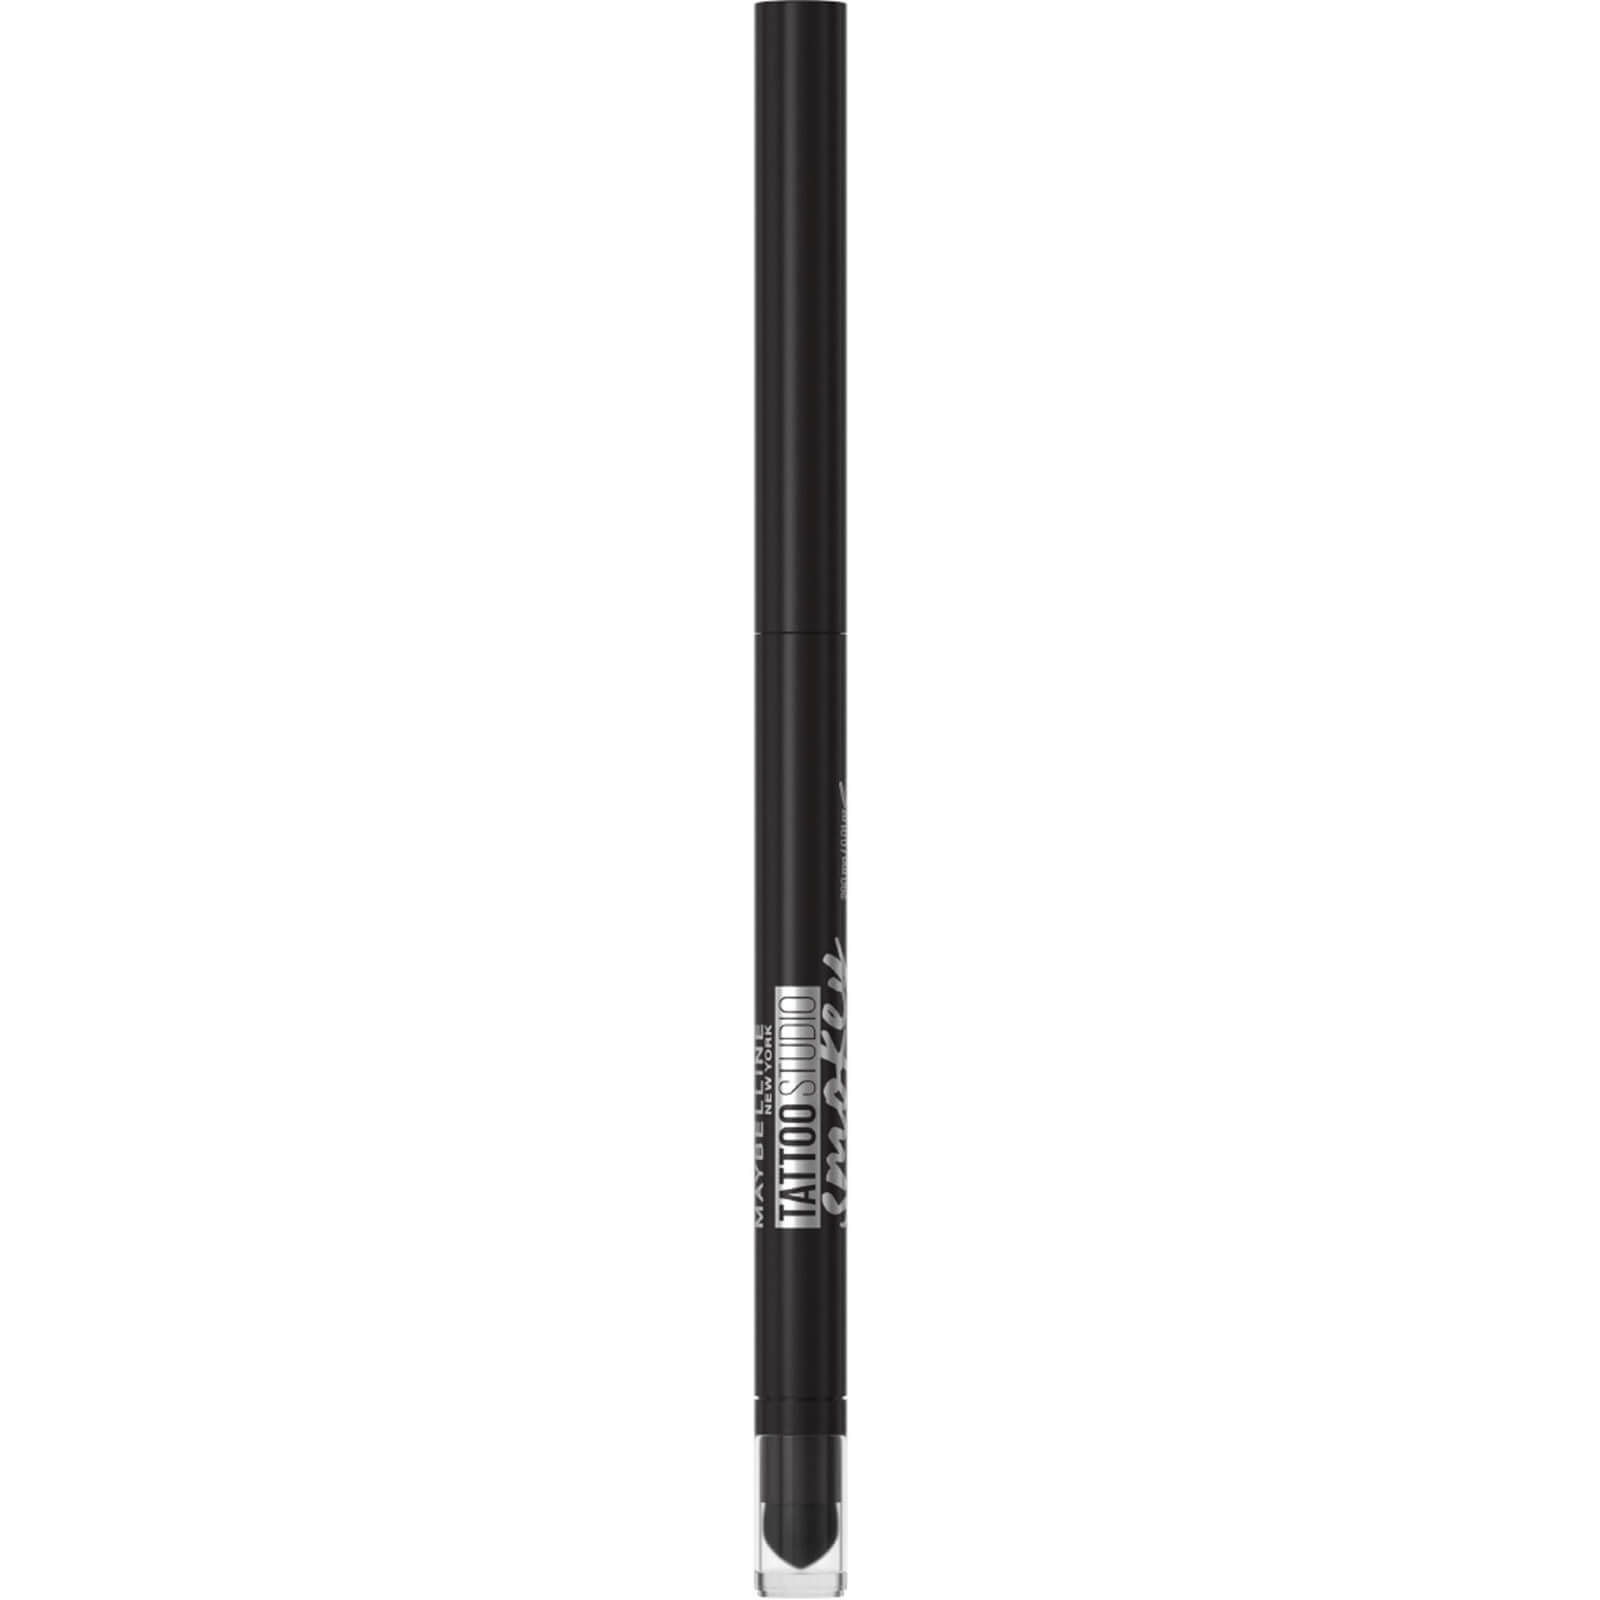 Maybelline Tattoo Liner Smokey Gel Pencil Eye Liner Waterproof 5.12g (Various Shades) - 10 Smokey Bl